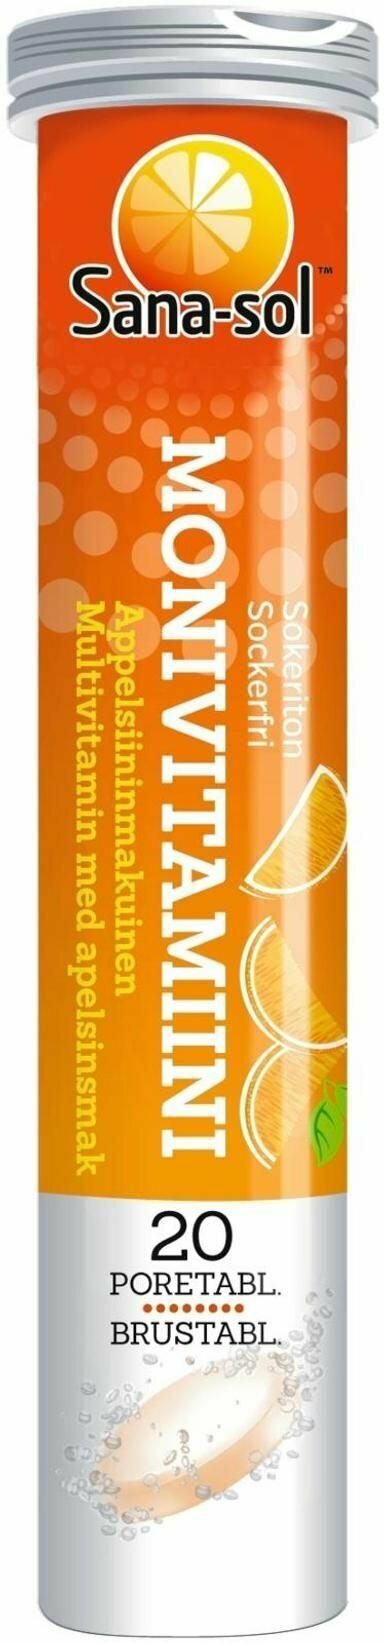 Шипучие таблетки Sana-sol MONIVITAMIINI мультивитамины со вкусом апельсина 20 таб. (из Финляндии)